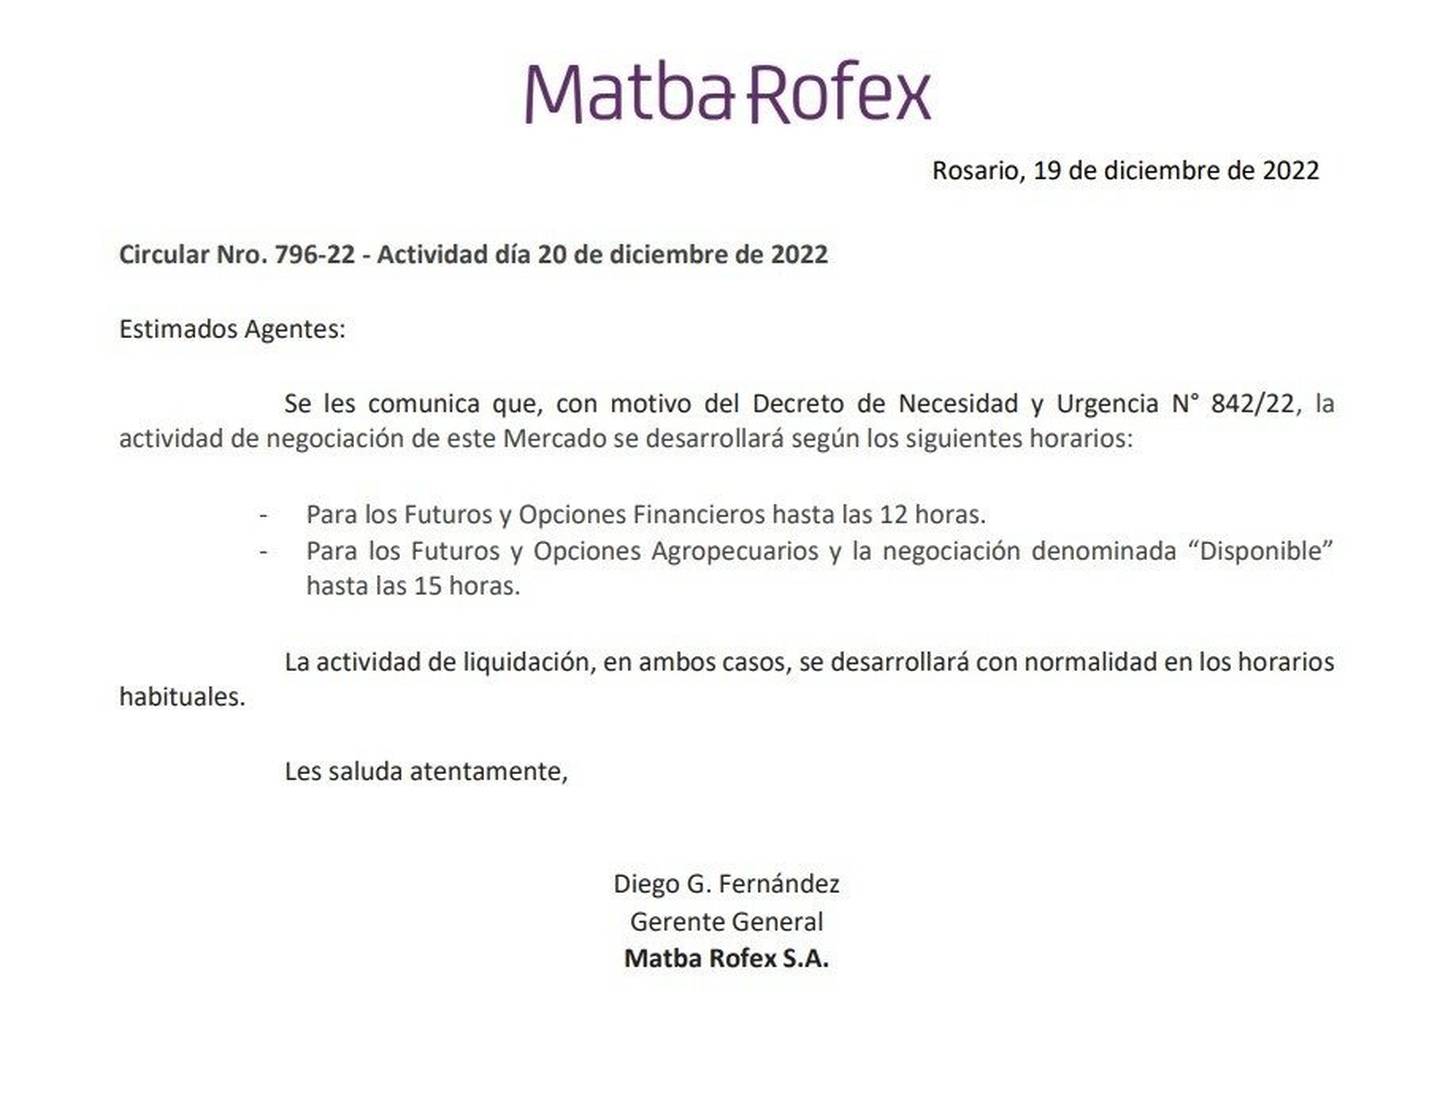 El comunicado de Matba Rofexdfd